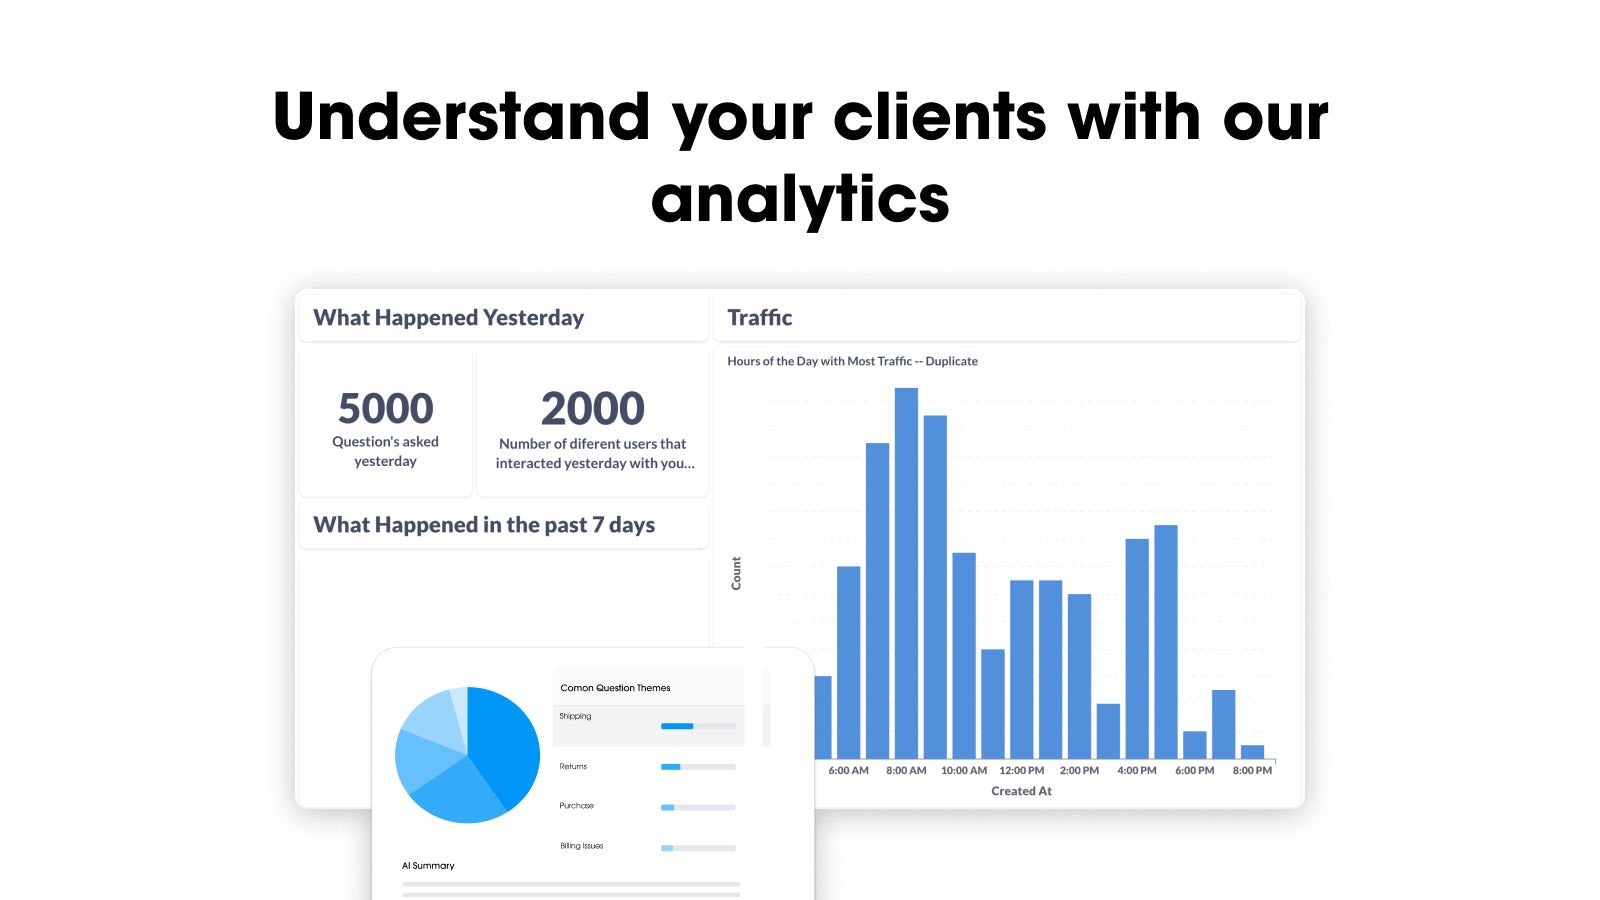 Analytics feature for client understanding